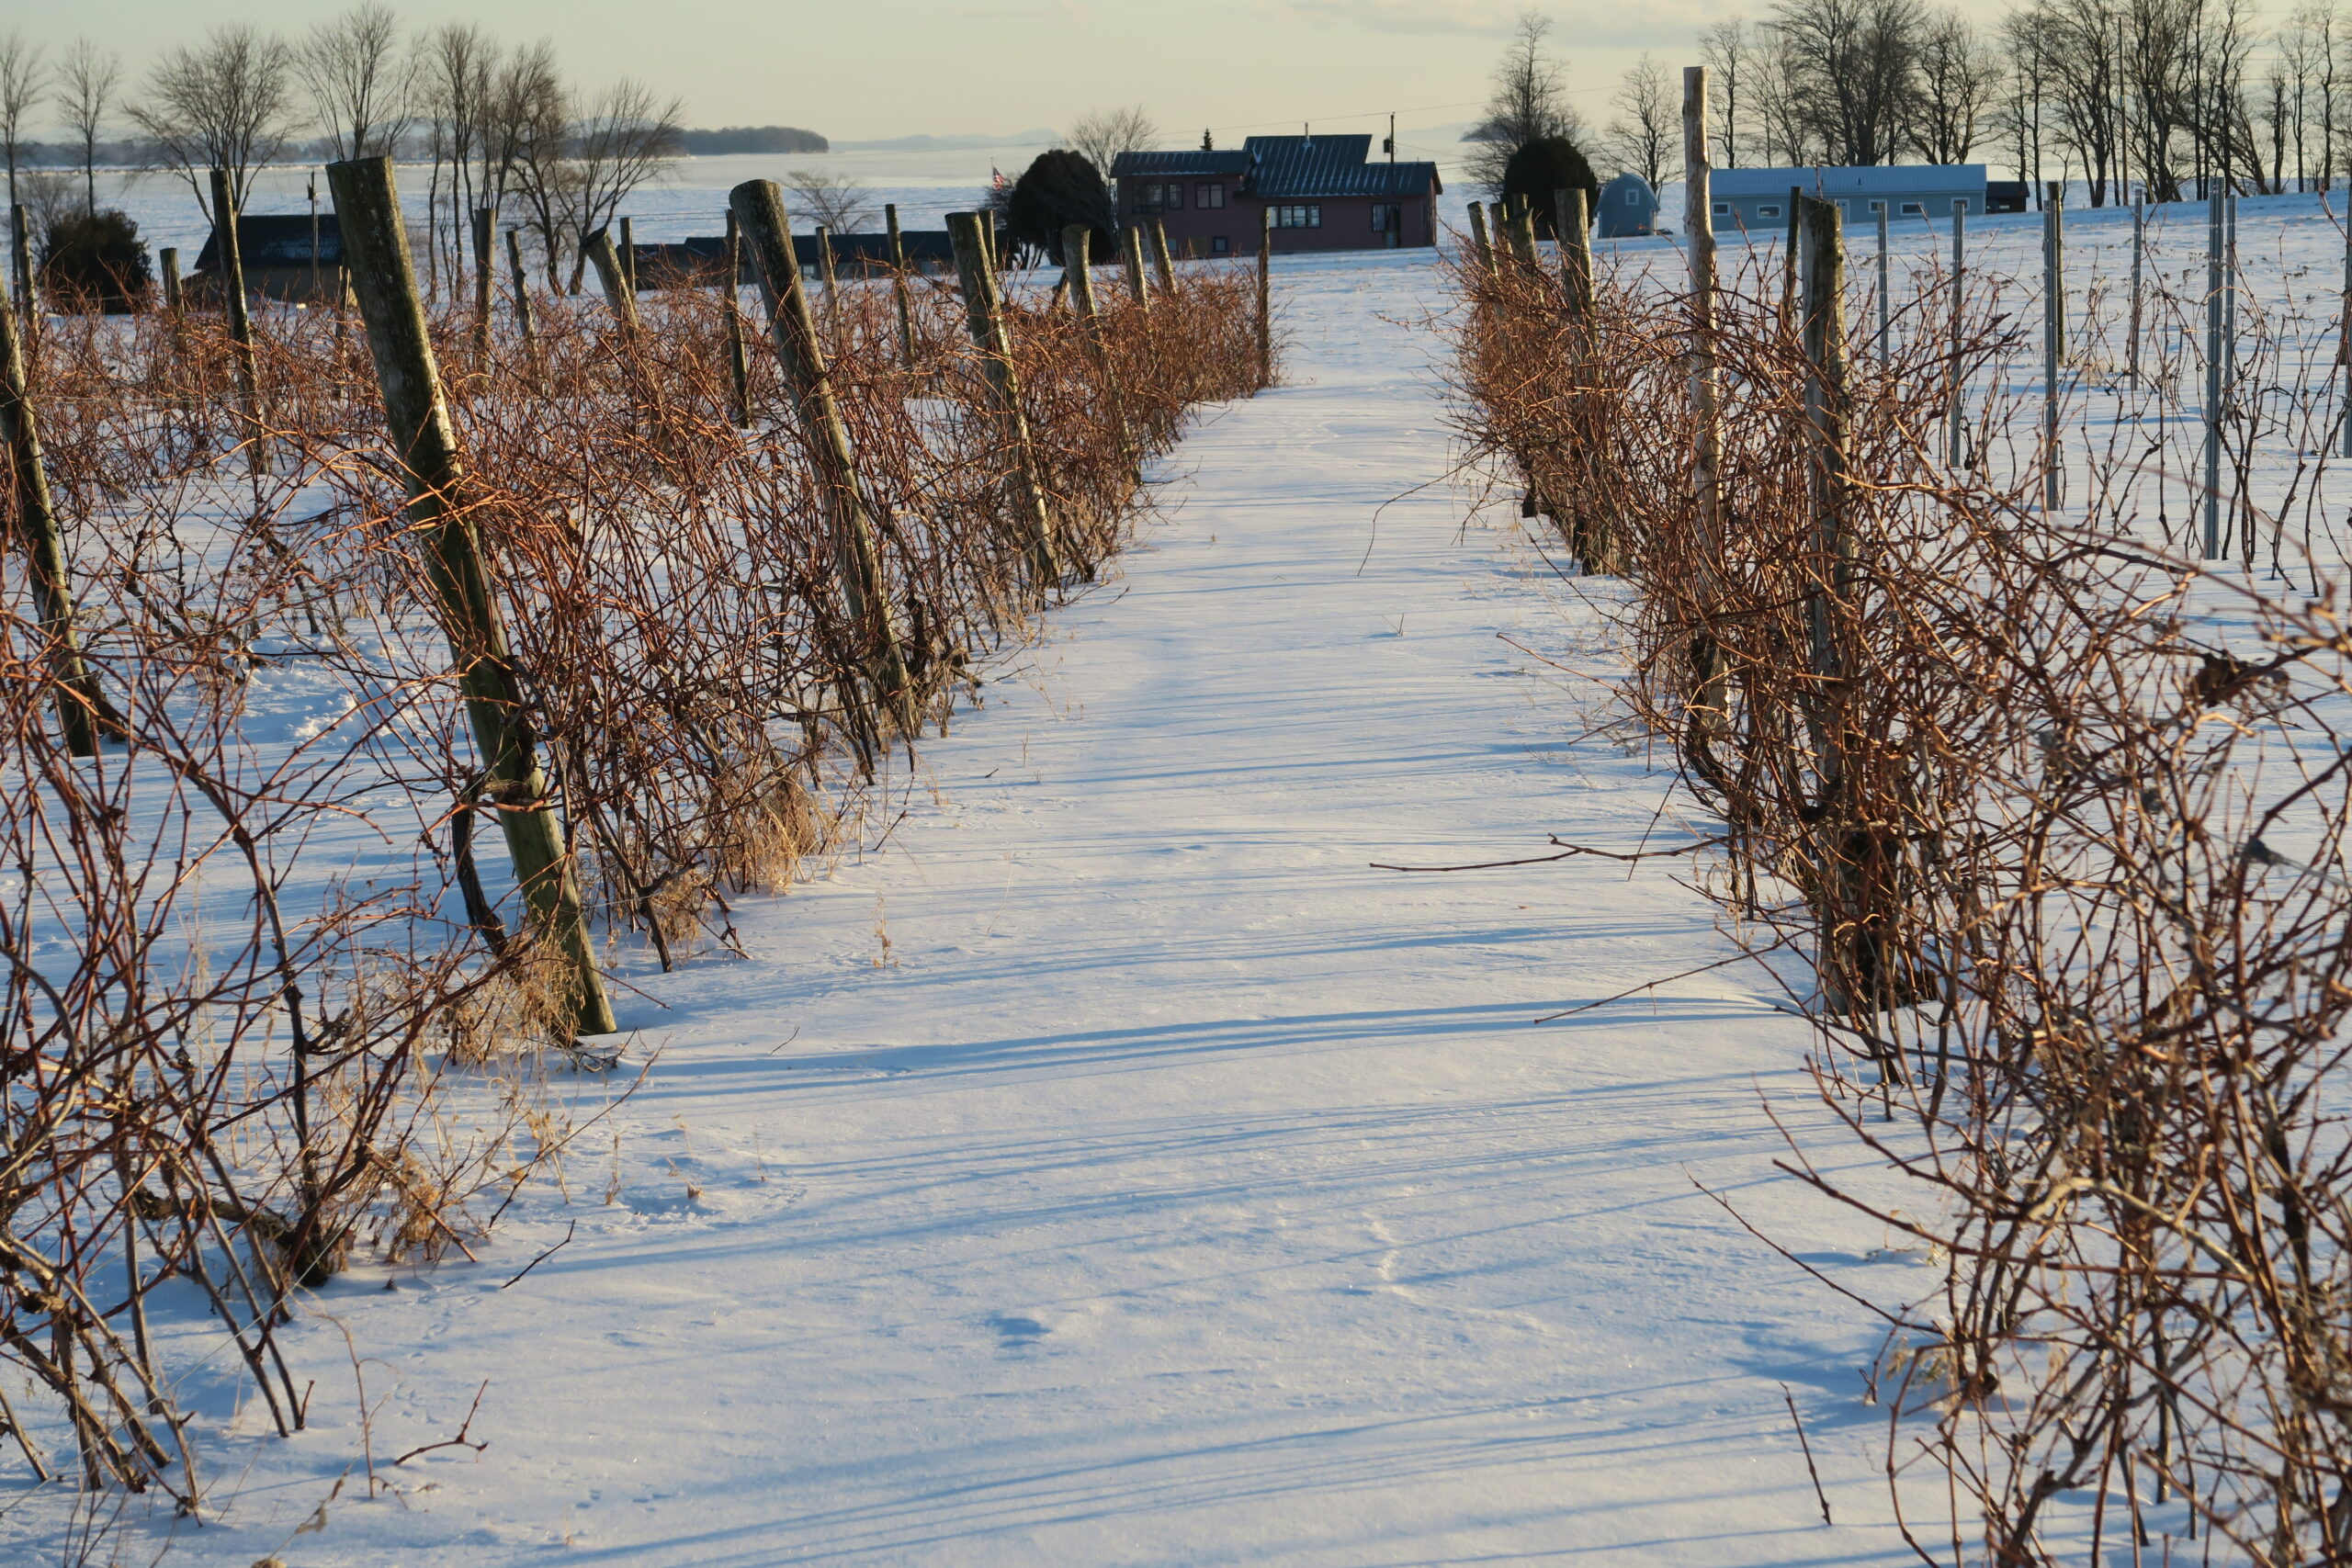 vermont wine vineyard in the winter view of brown vines